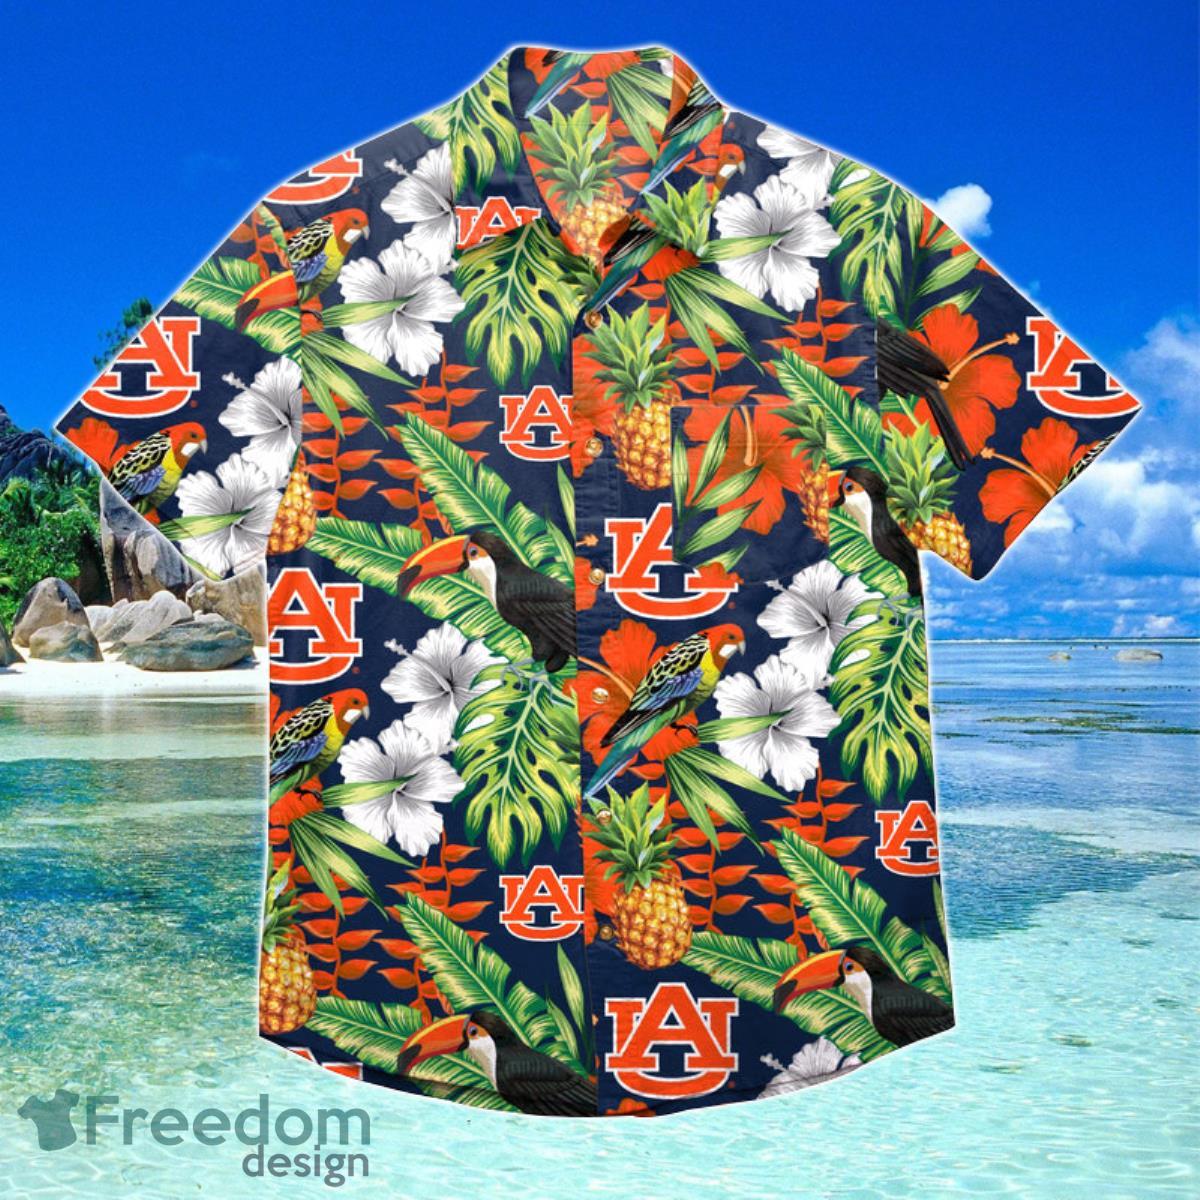 Boston Bruins NHL Flower Hawaiian Shirt Best Gift For Men And Women Fans -  Freedomdesign